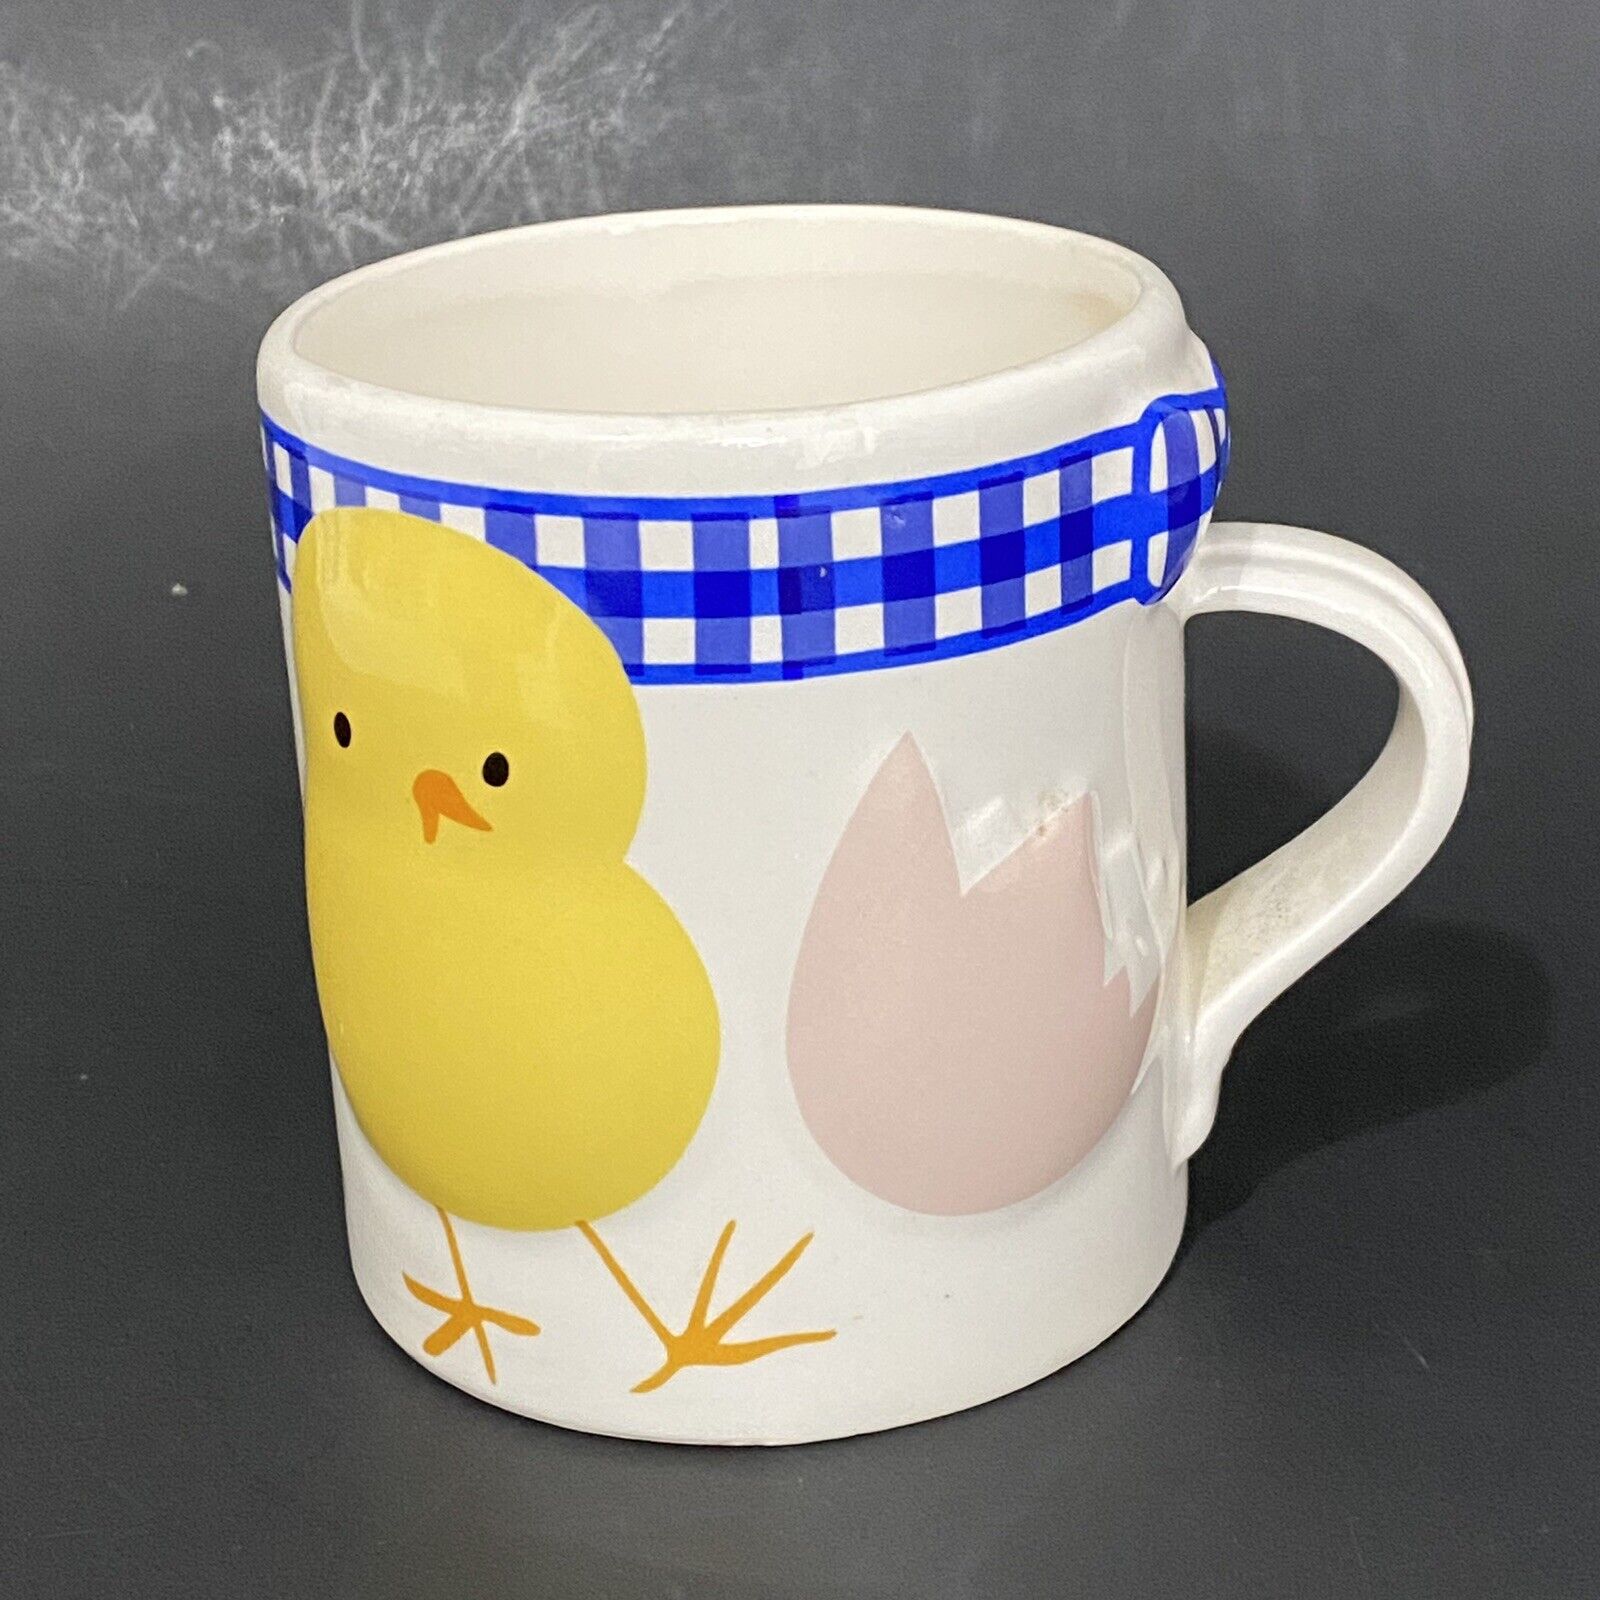 Gallery Originals Easter Hatching Chick Mug